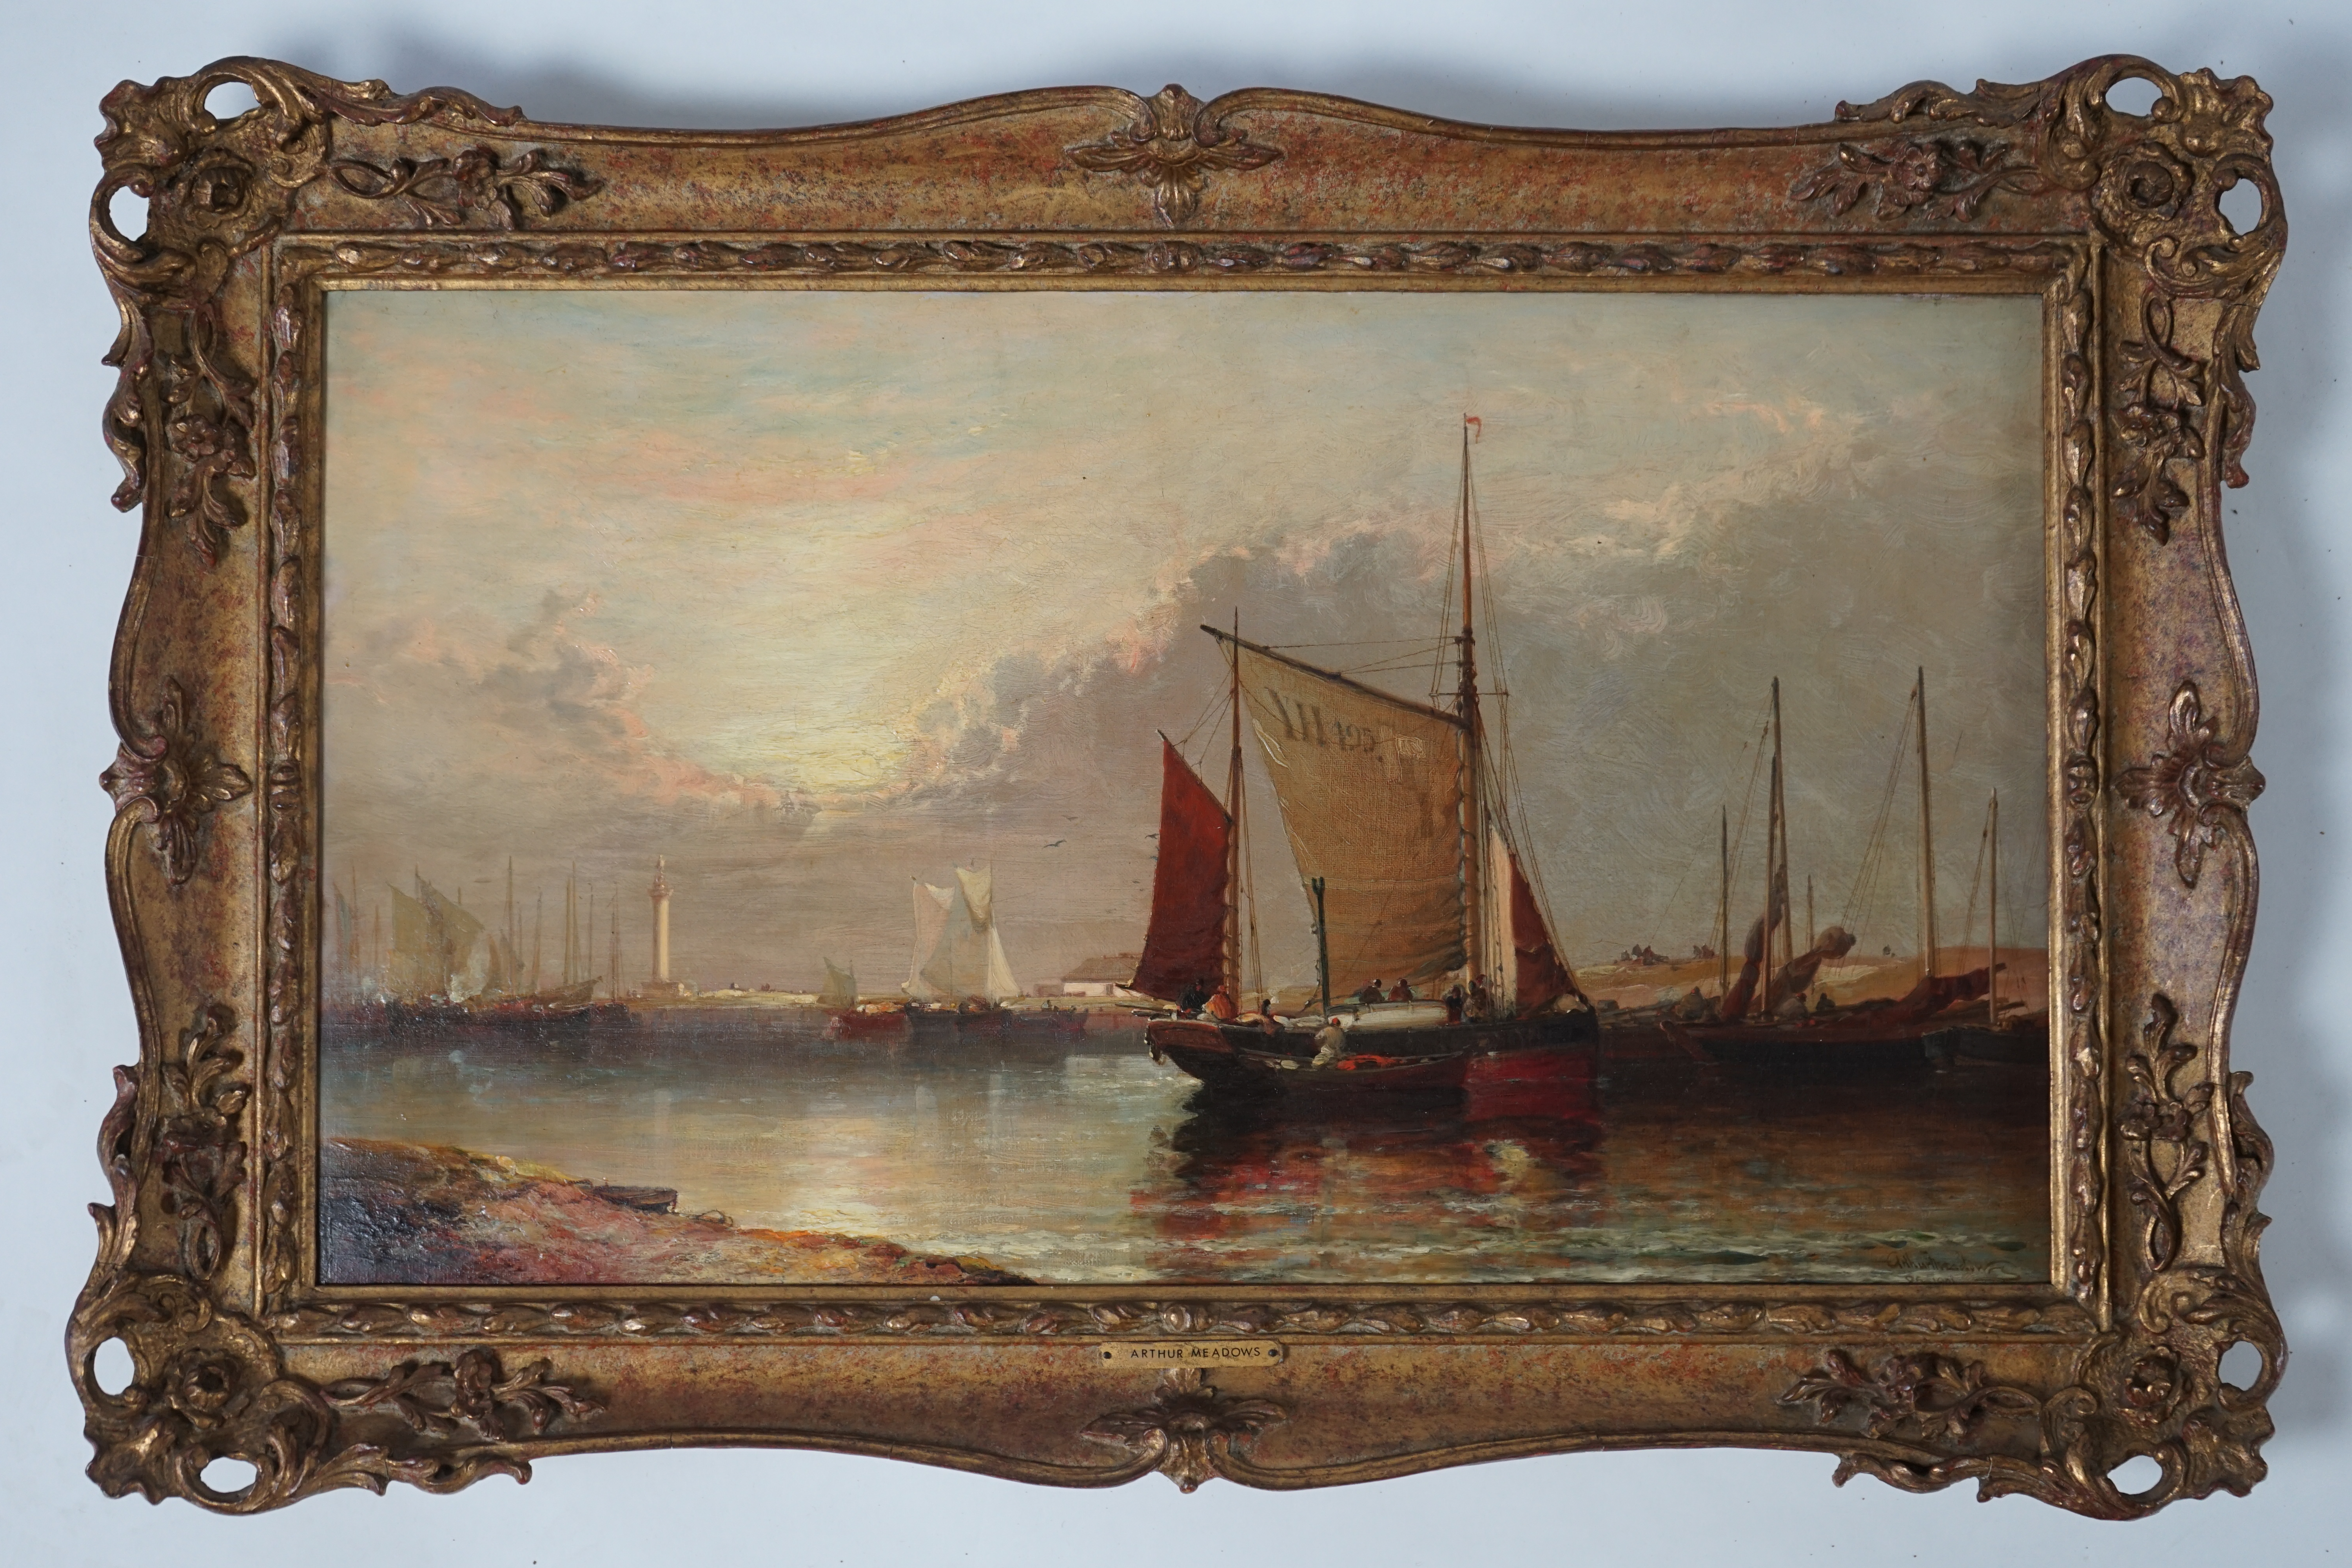 Arthur Joseph Meadows (English, 1843-1907), 'On The Yare - Early Morning', oil on canvas, 34 x 60cm